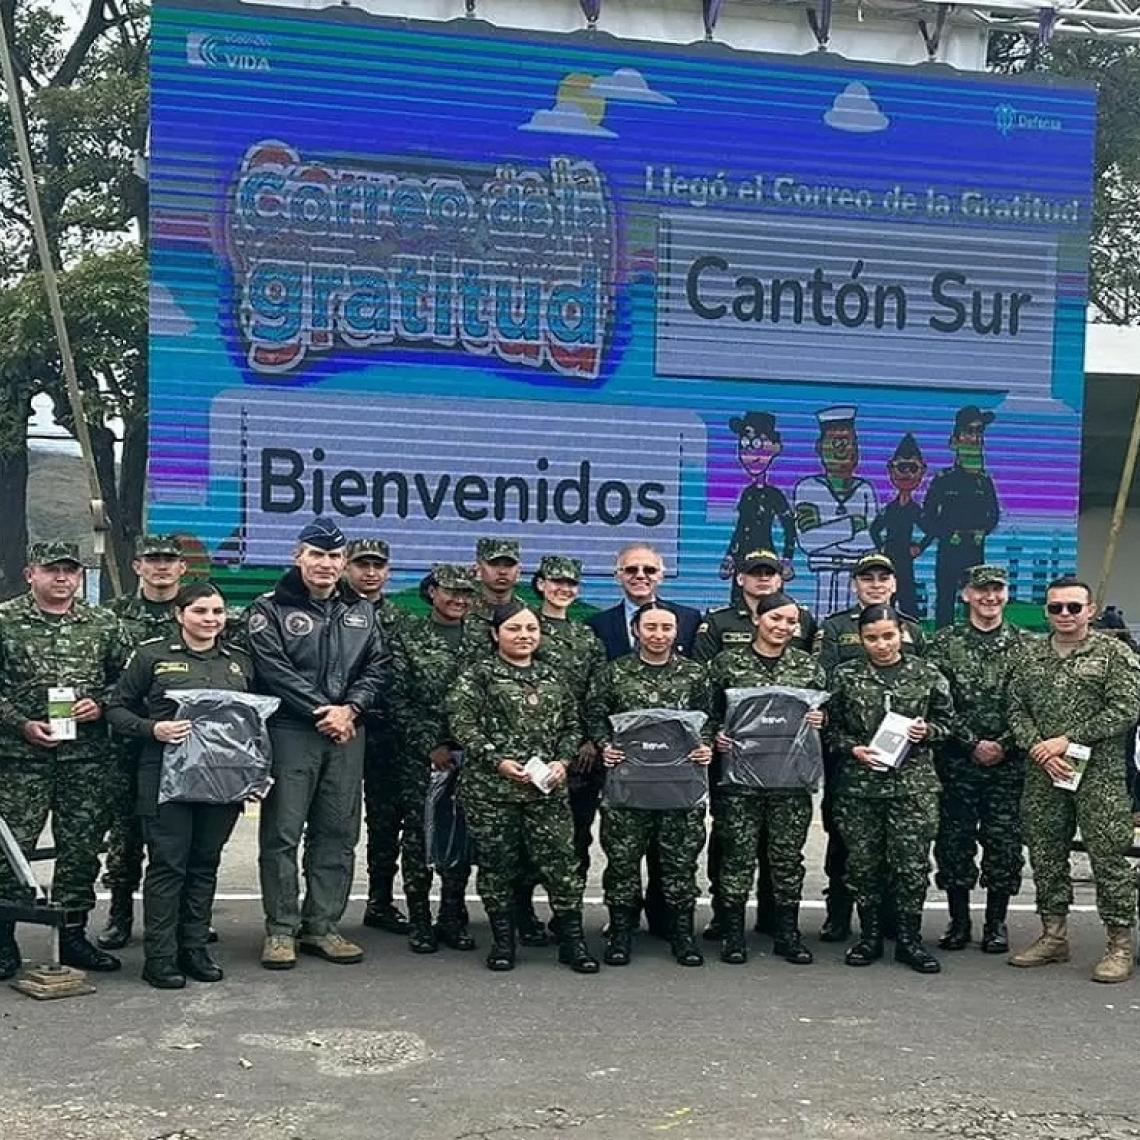 Segunda jornada del correo de la gratitud se realiza en Bogotá